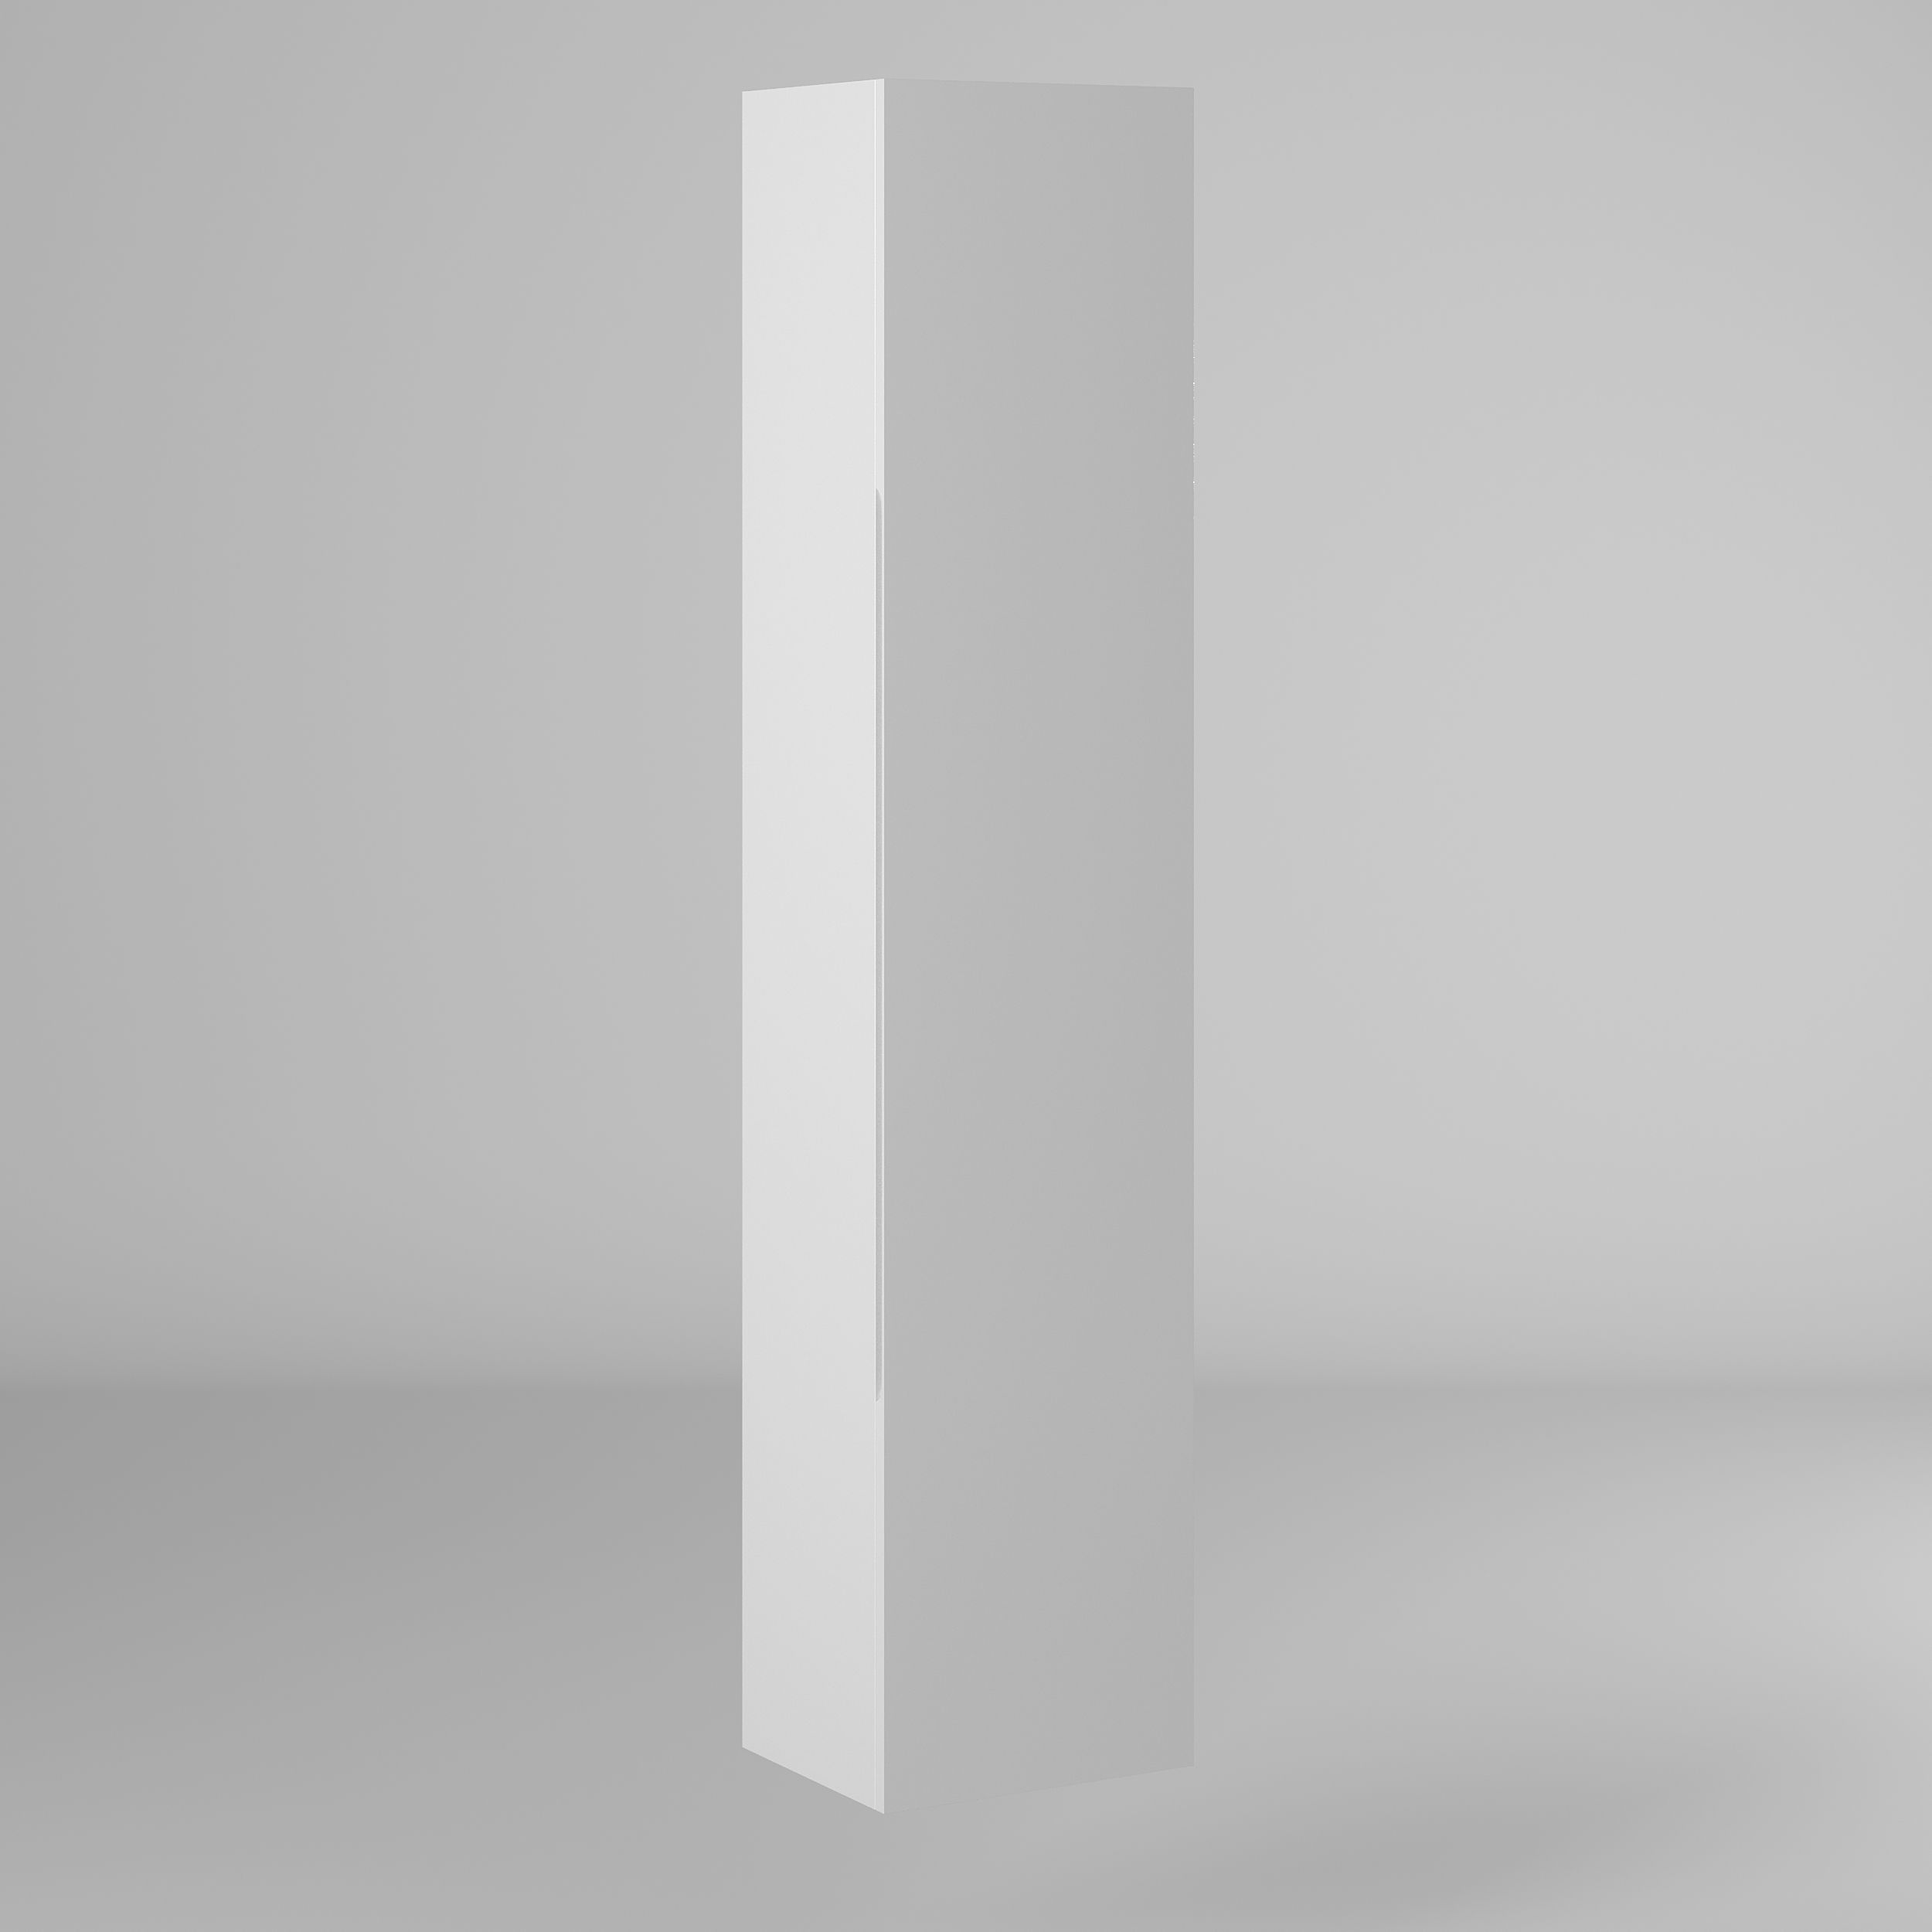 Пенал Briz Бьелла 35 см, белый глянец фото CULTO